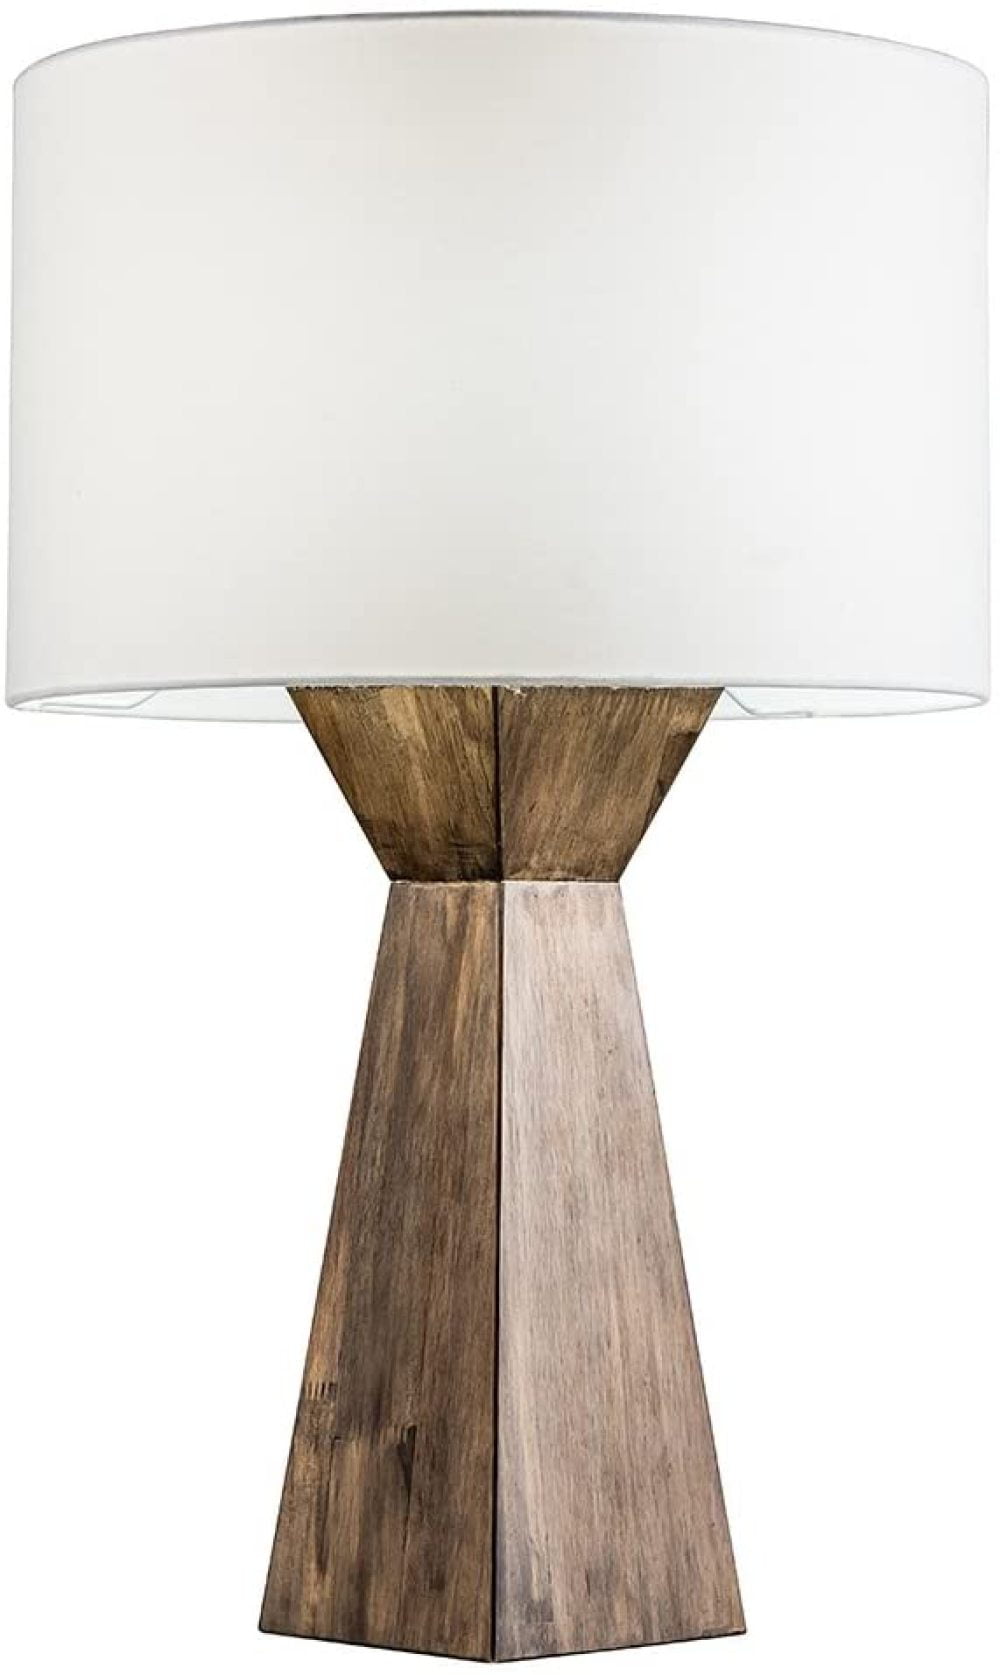 Espresso Geometric Wood Table Lamp wNatural Jute Shade